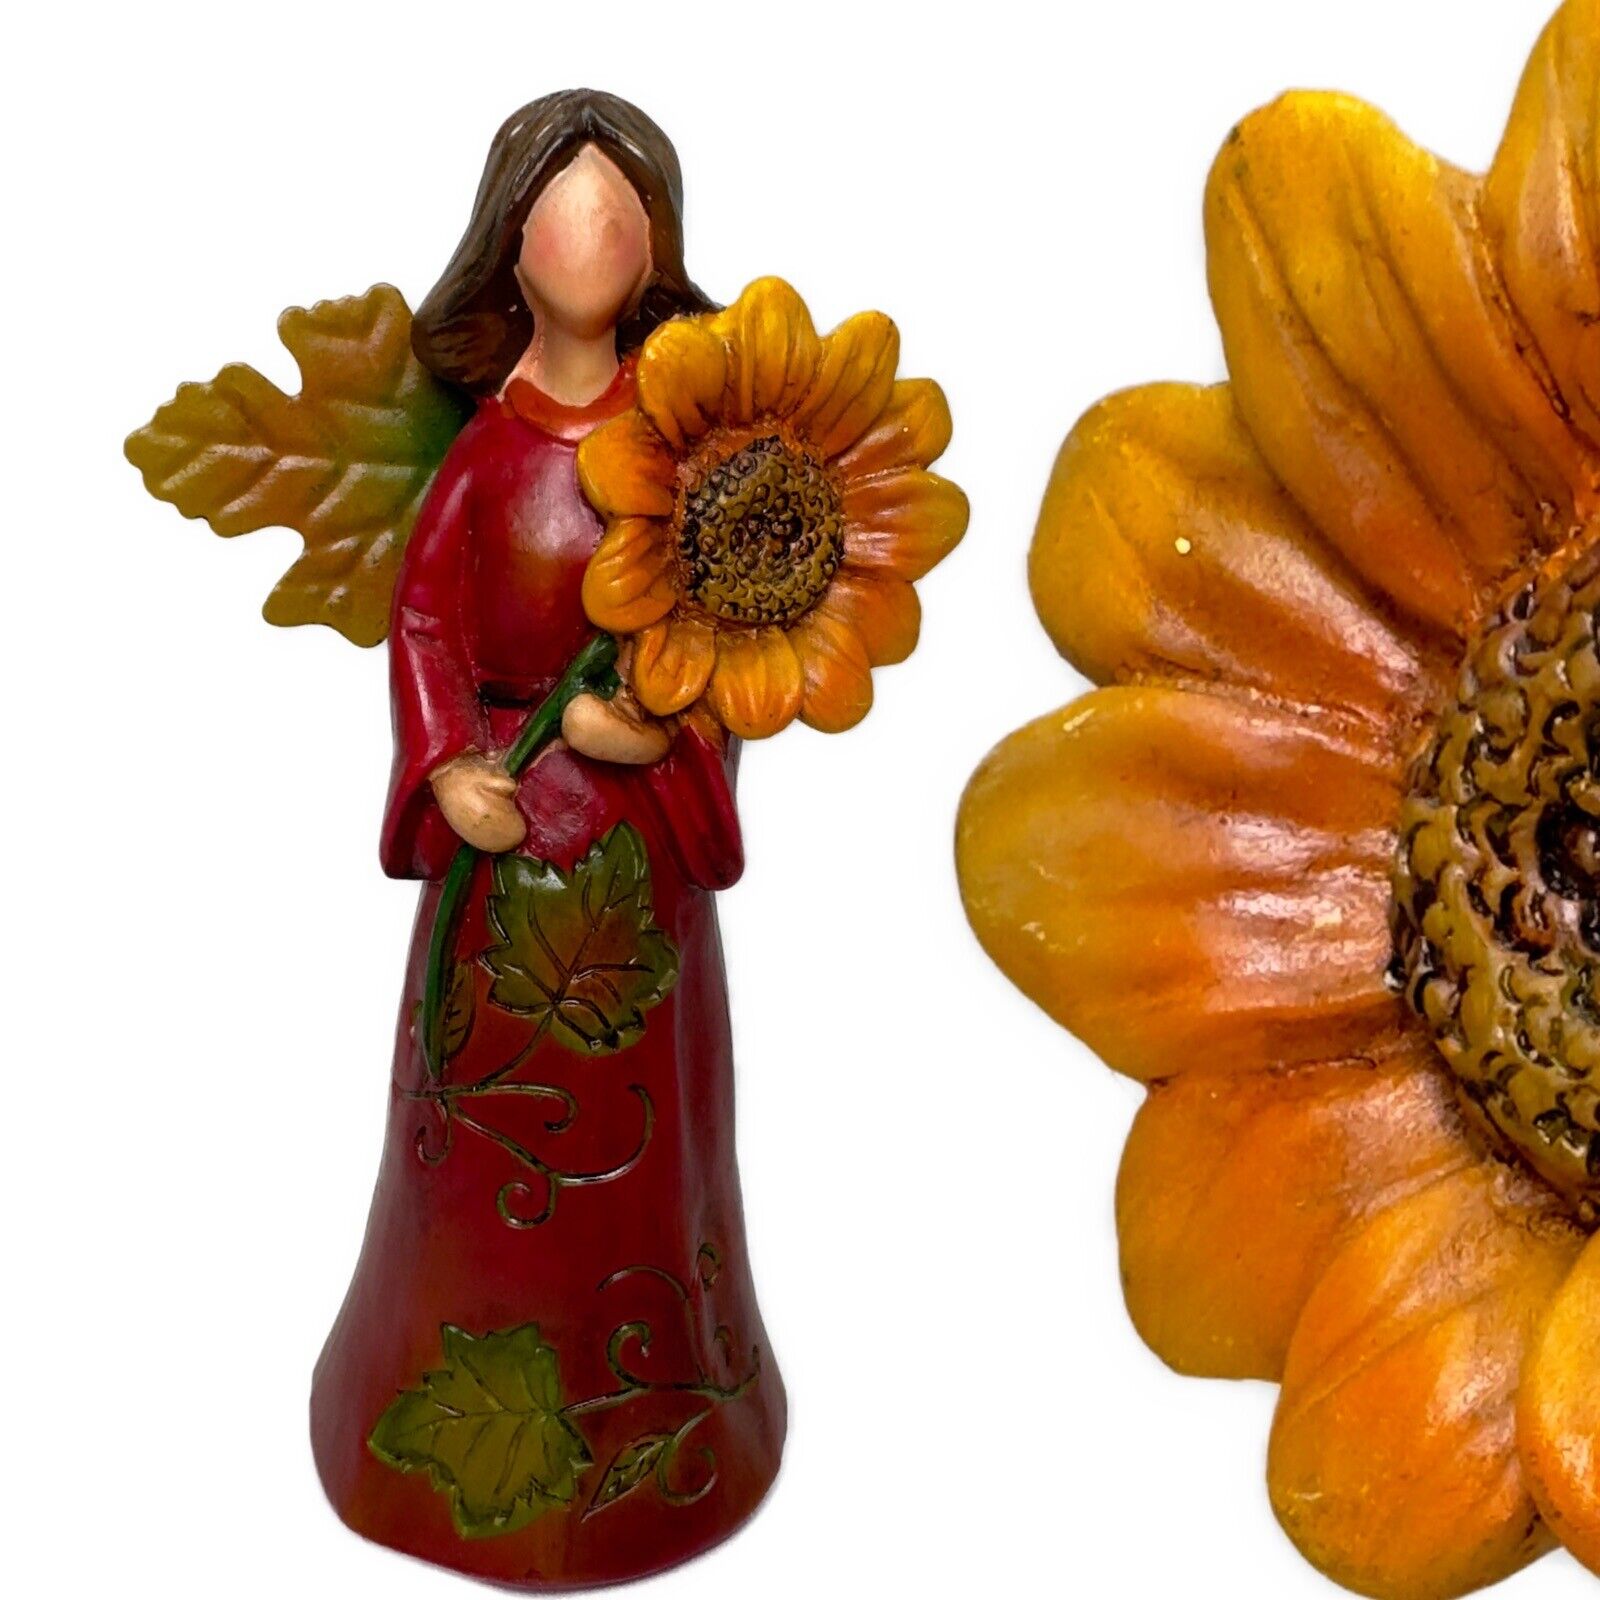 Autumn Thanksgiving Angel Resin Figurine Holding A Sunflower